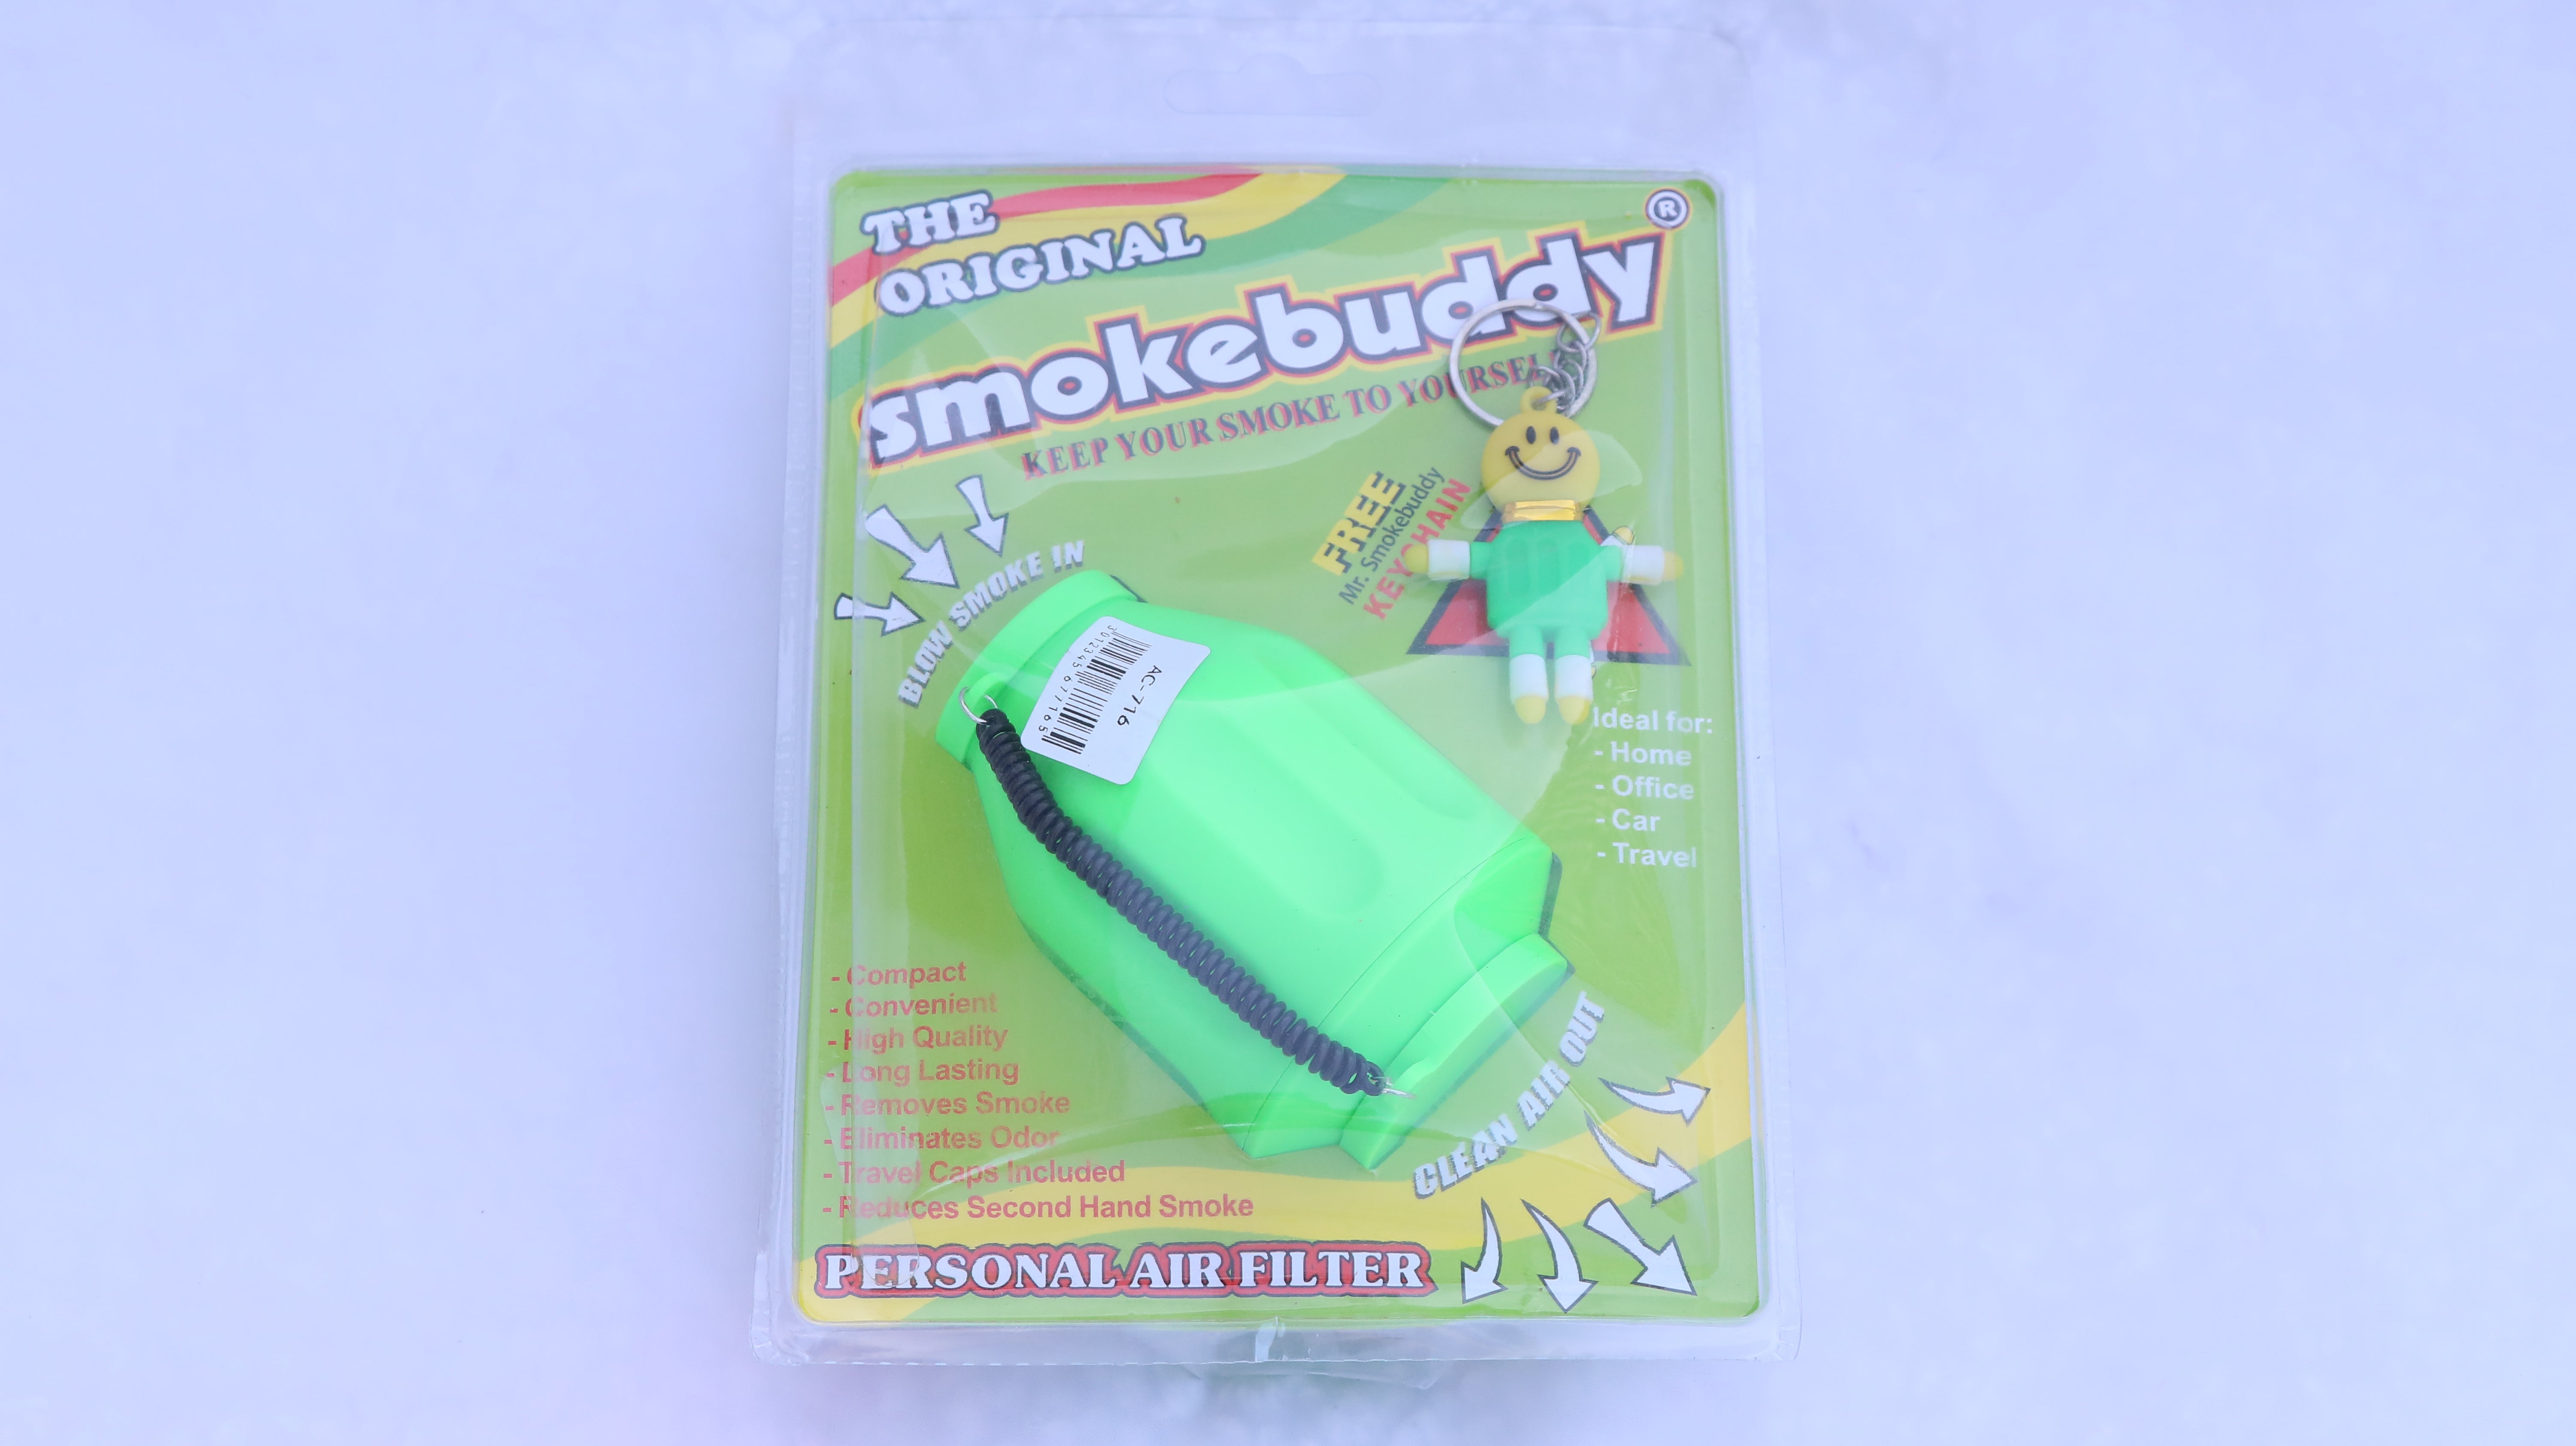 Smokebuddy 'Original' Personal Air Filter – Puff Puff Palace